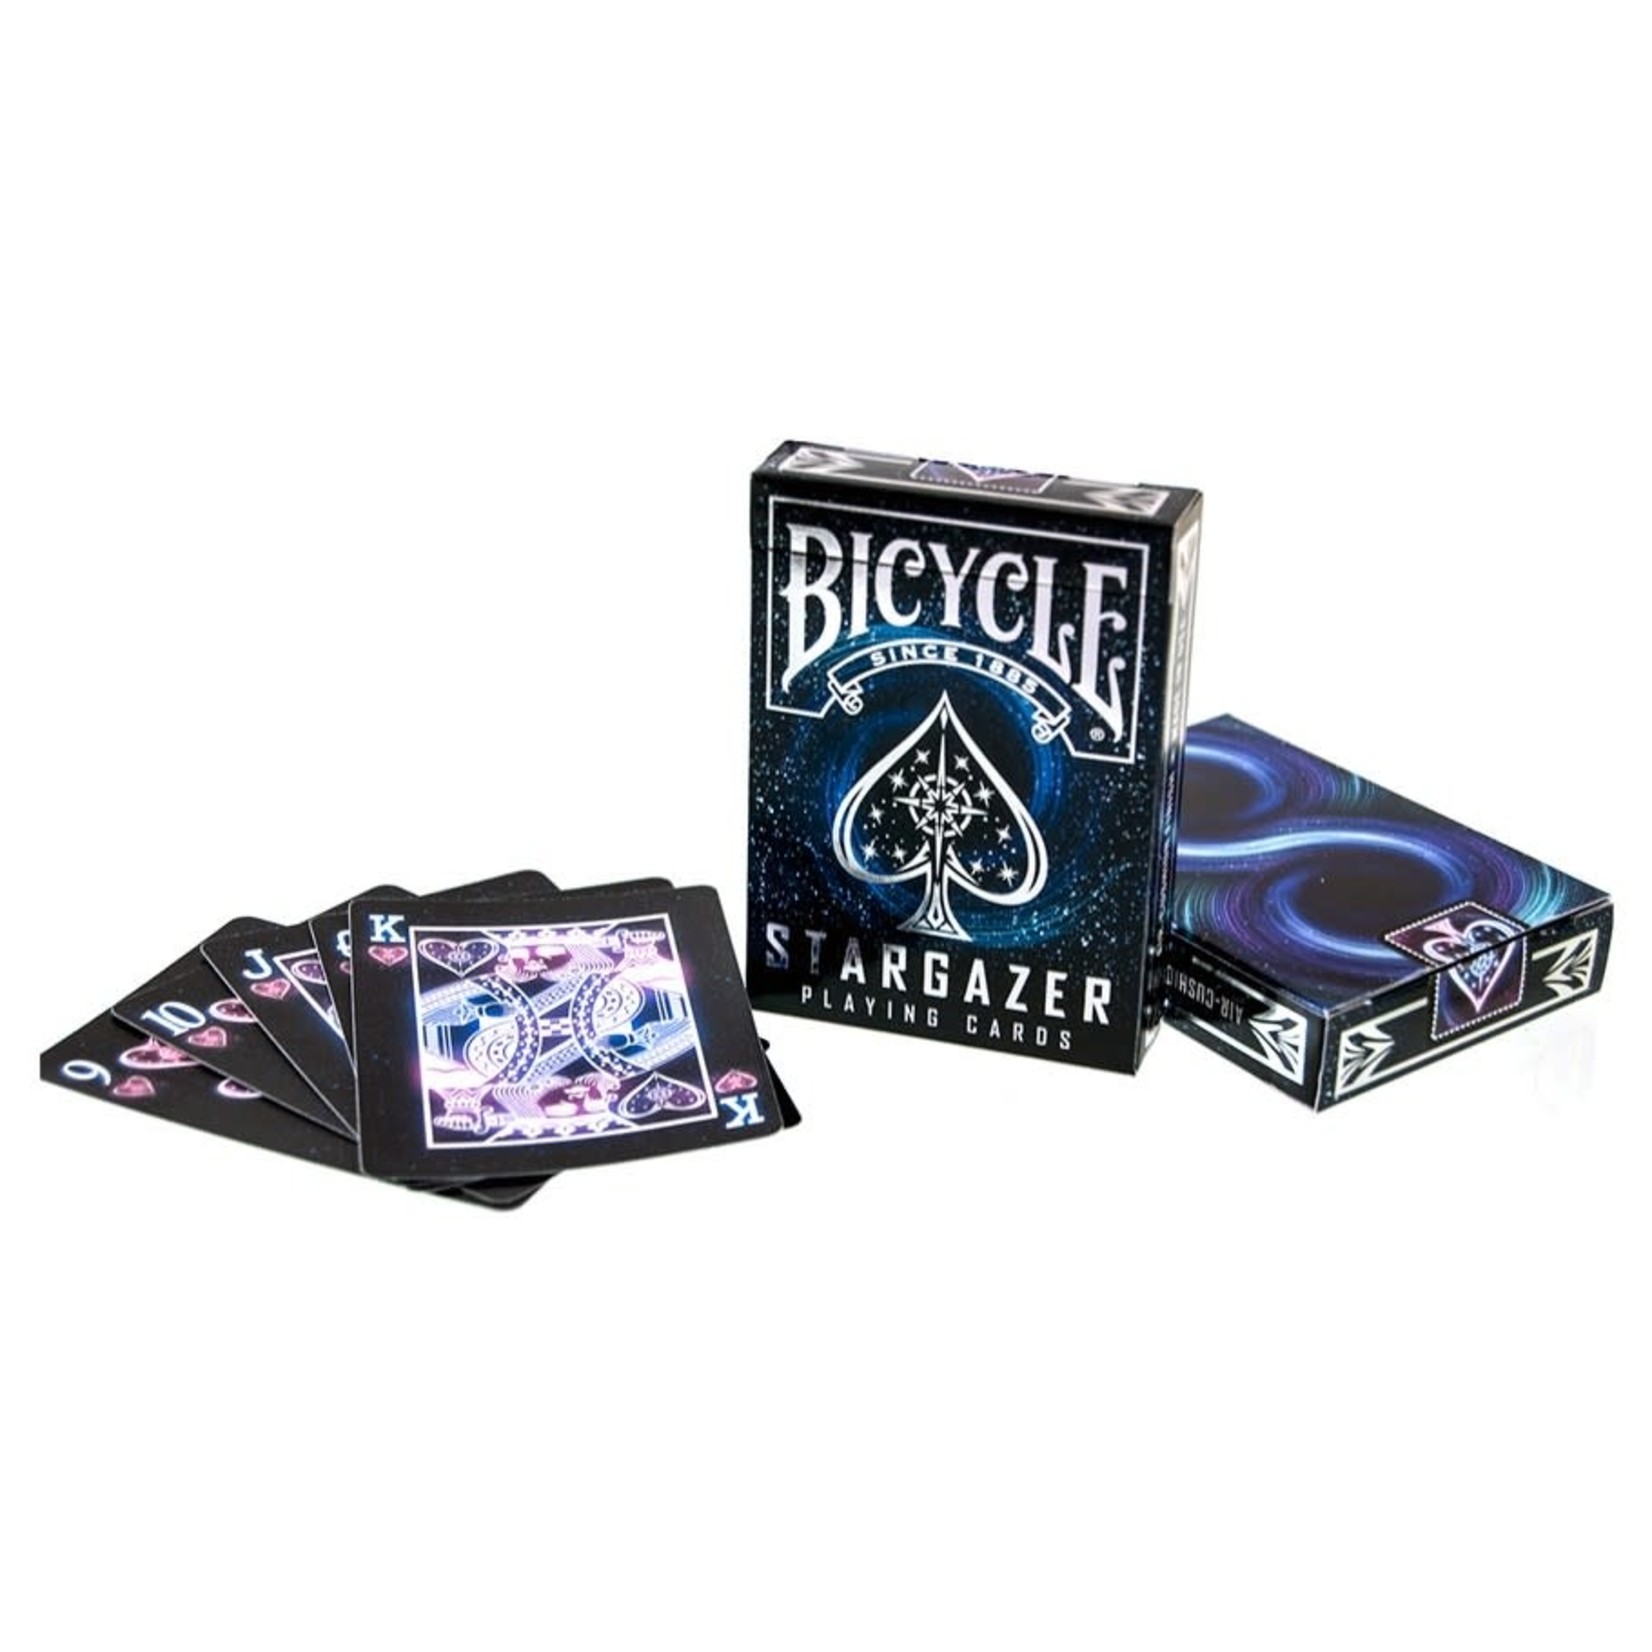 Bicycle Bicycle Playing Cards: Stargazer